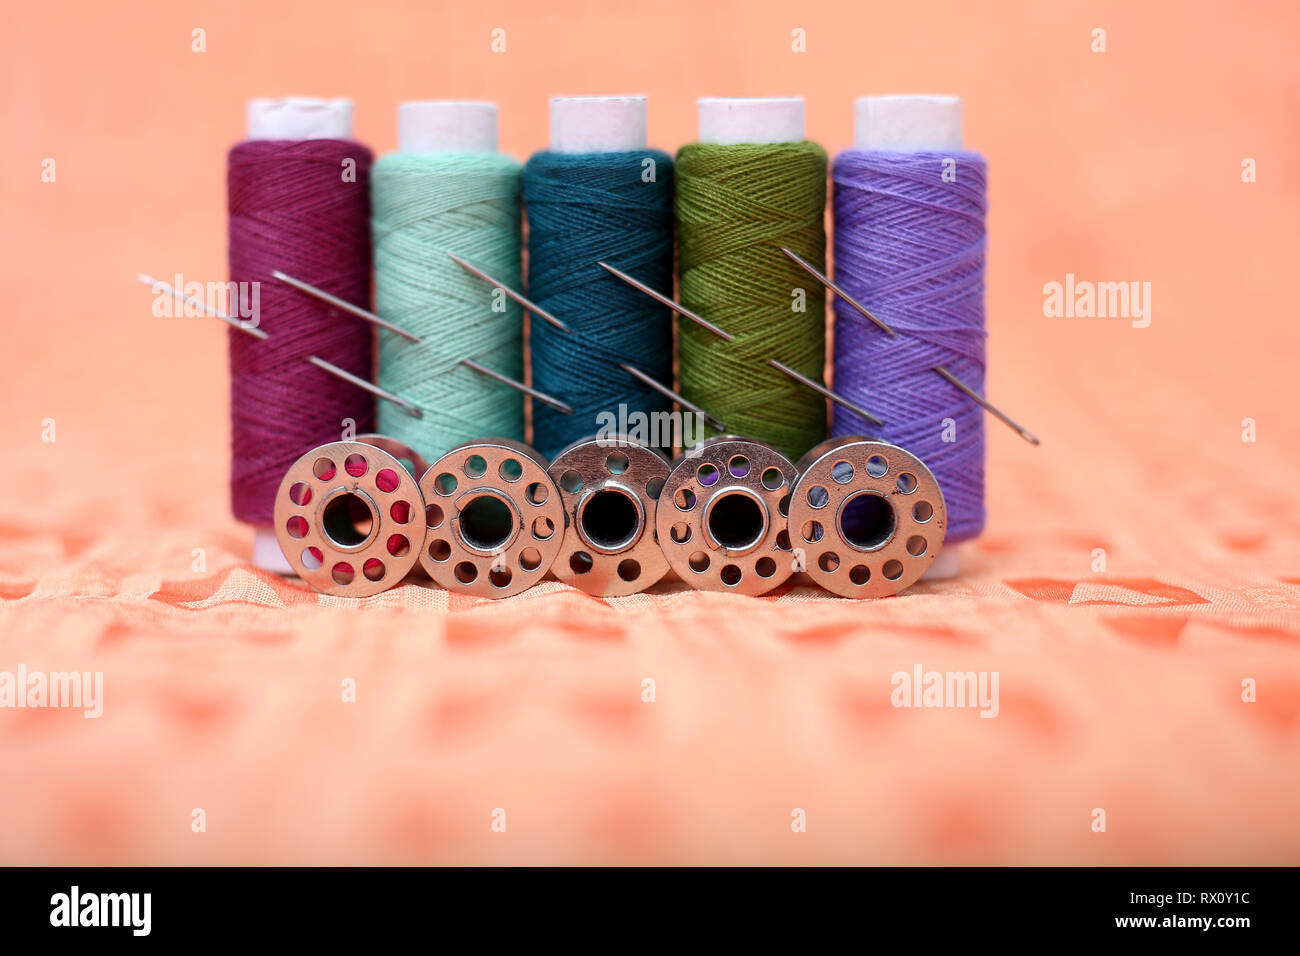 Portrait of multicolored sewing thread, needle and bobbin on the orange cloth. Stock Photo